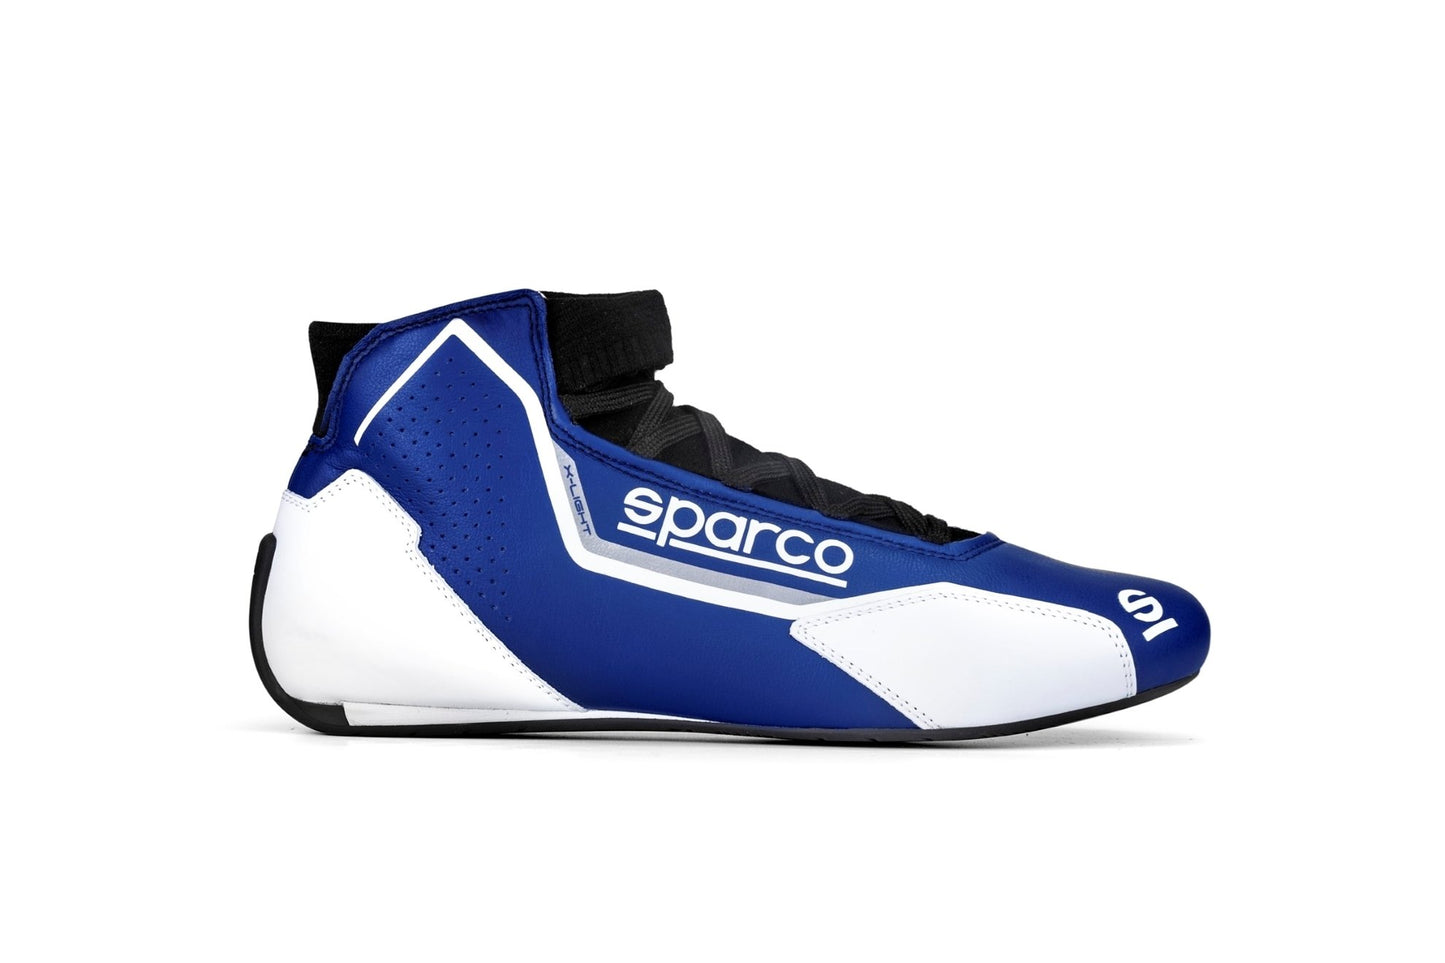 Sparco X-Light (2020) Racing Shoe